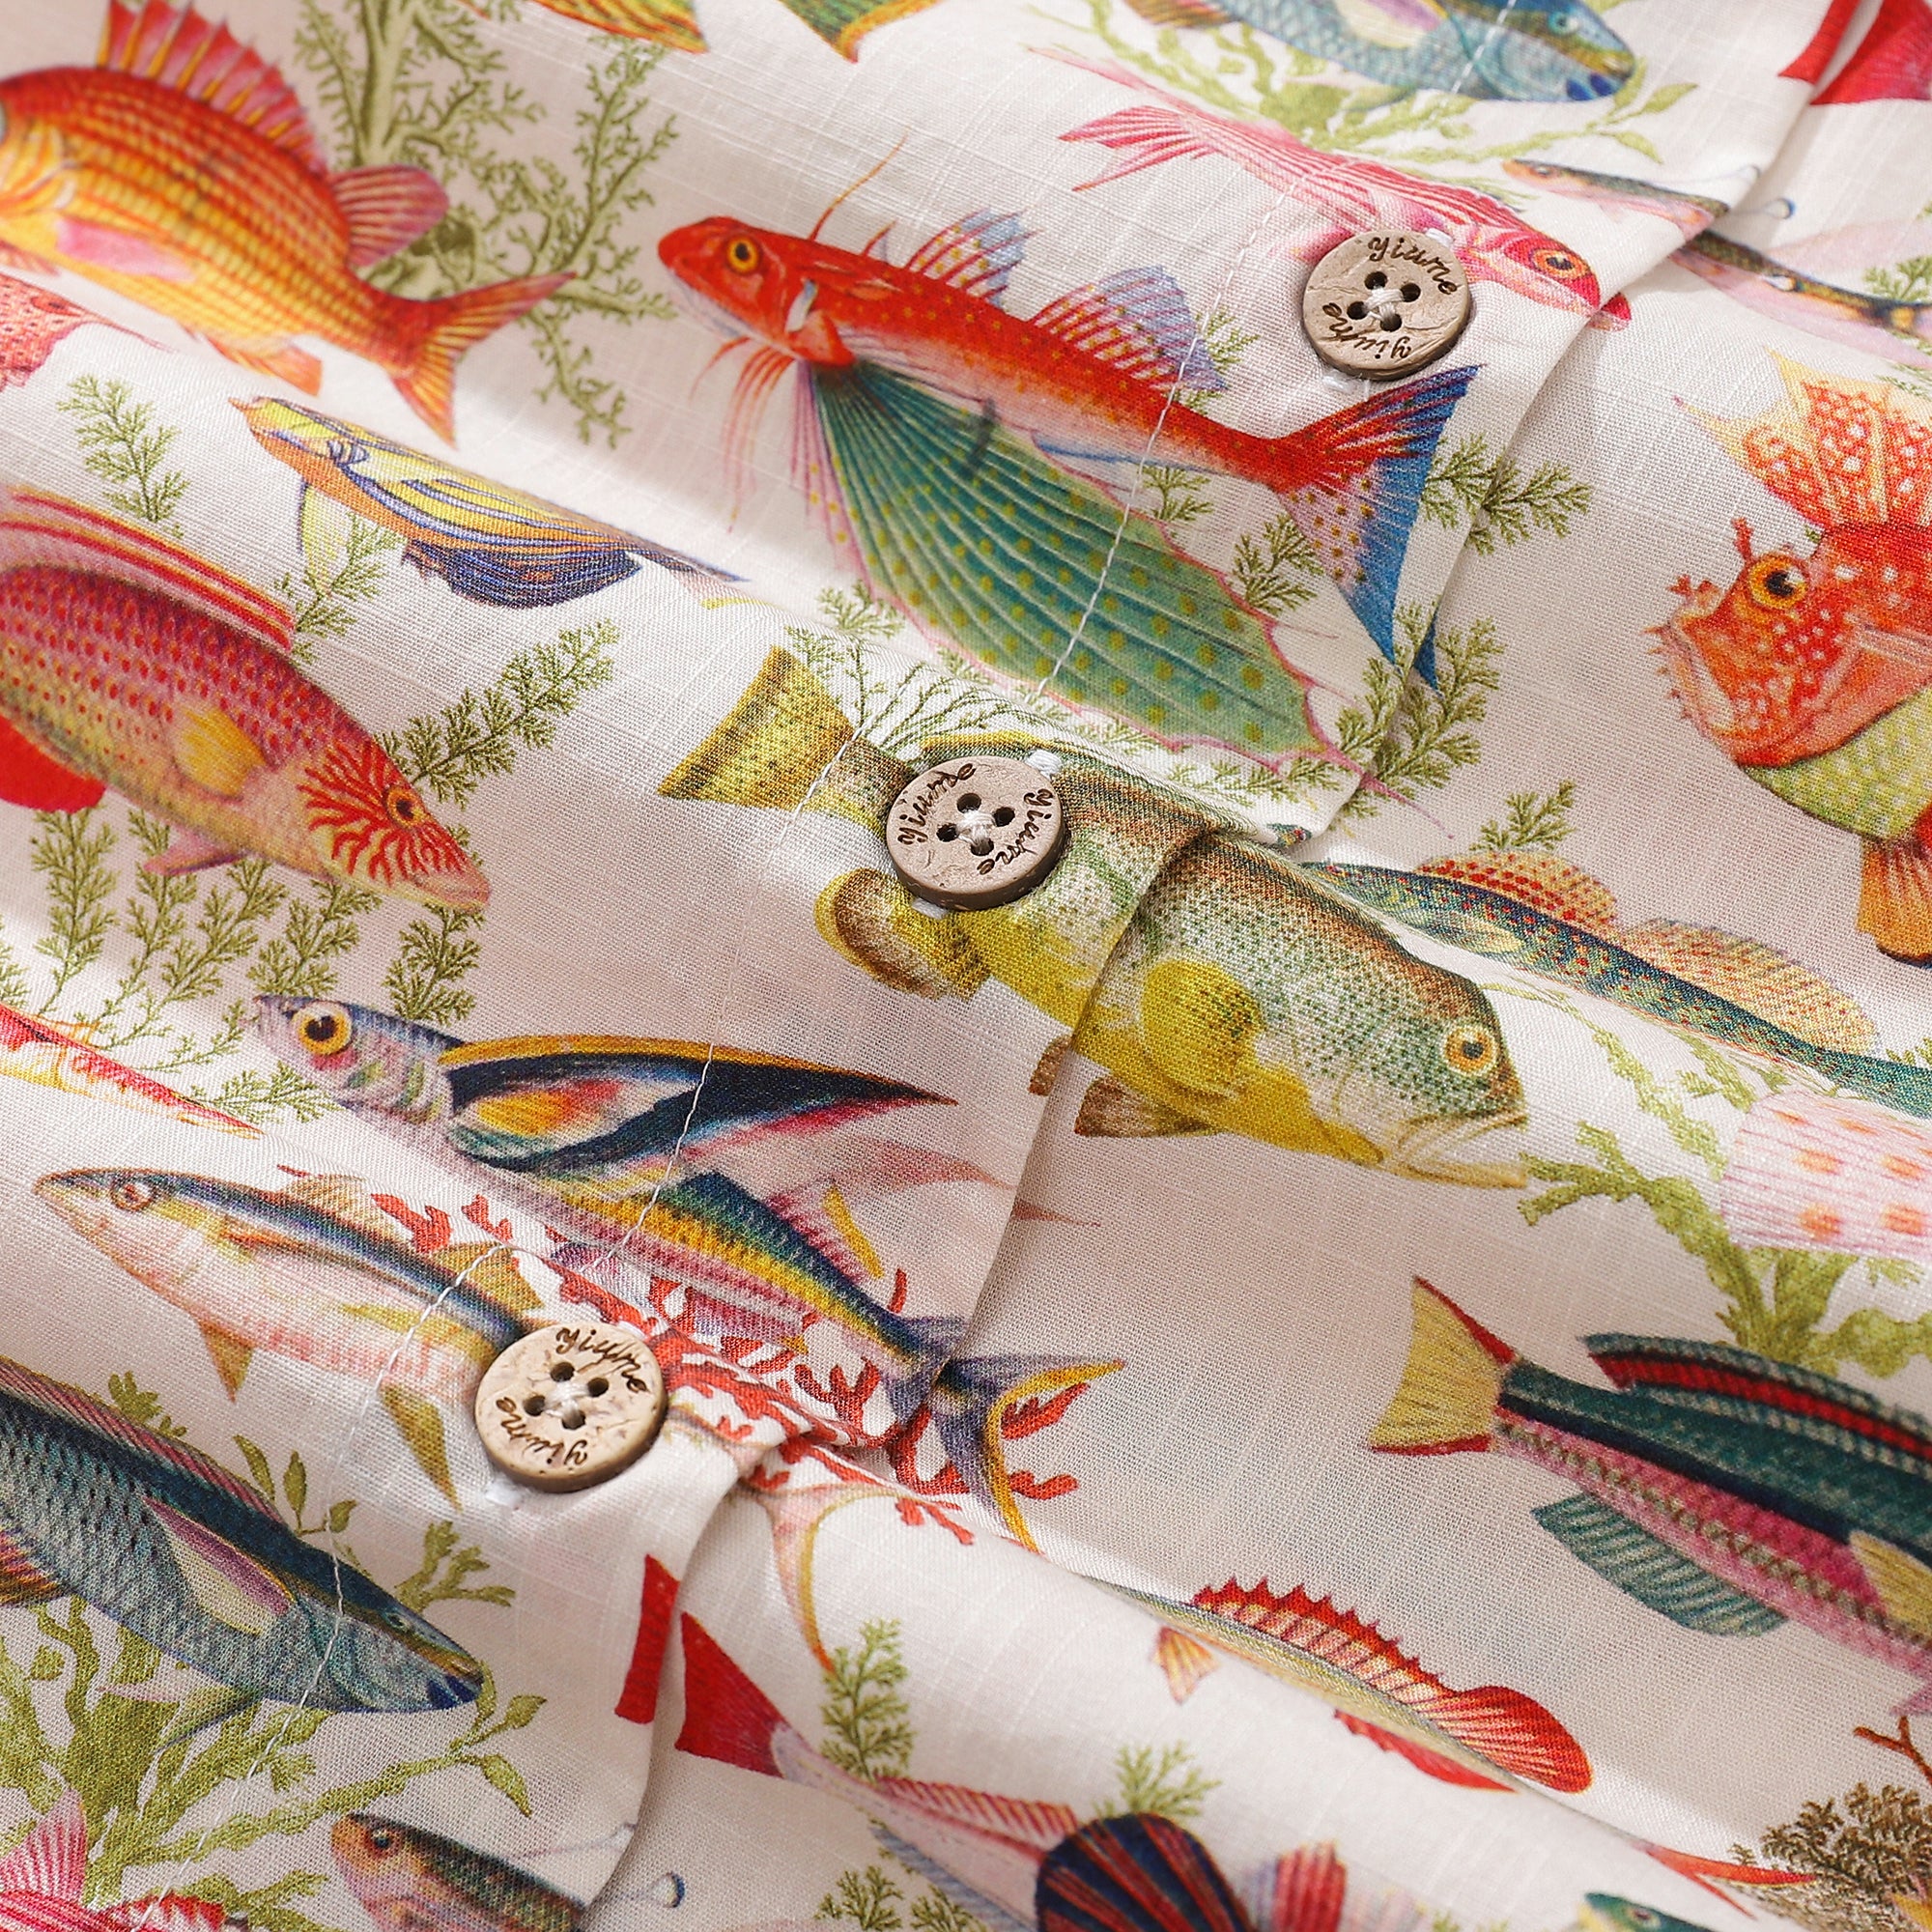 Women's Hawaiian Shirt Sea Ocean Fish Print Cotton Button-up Short Sleeve